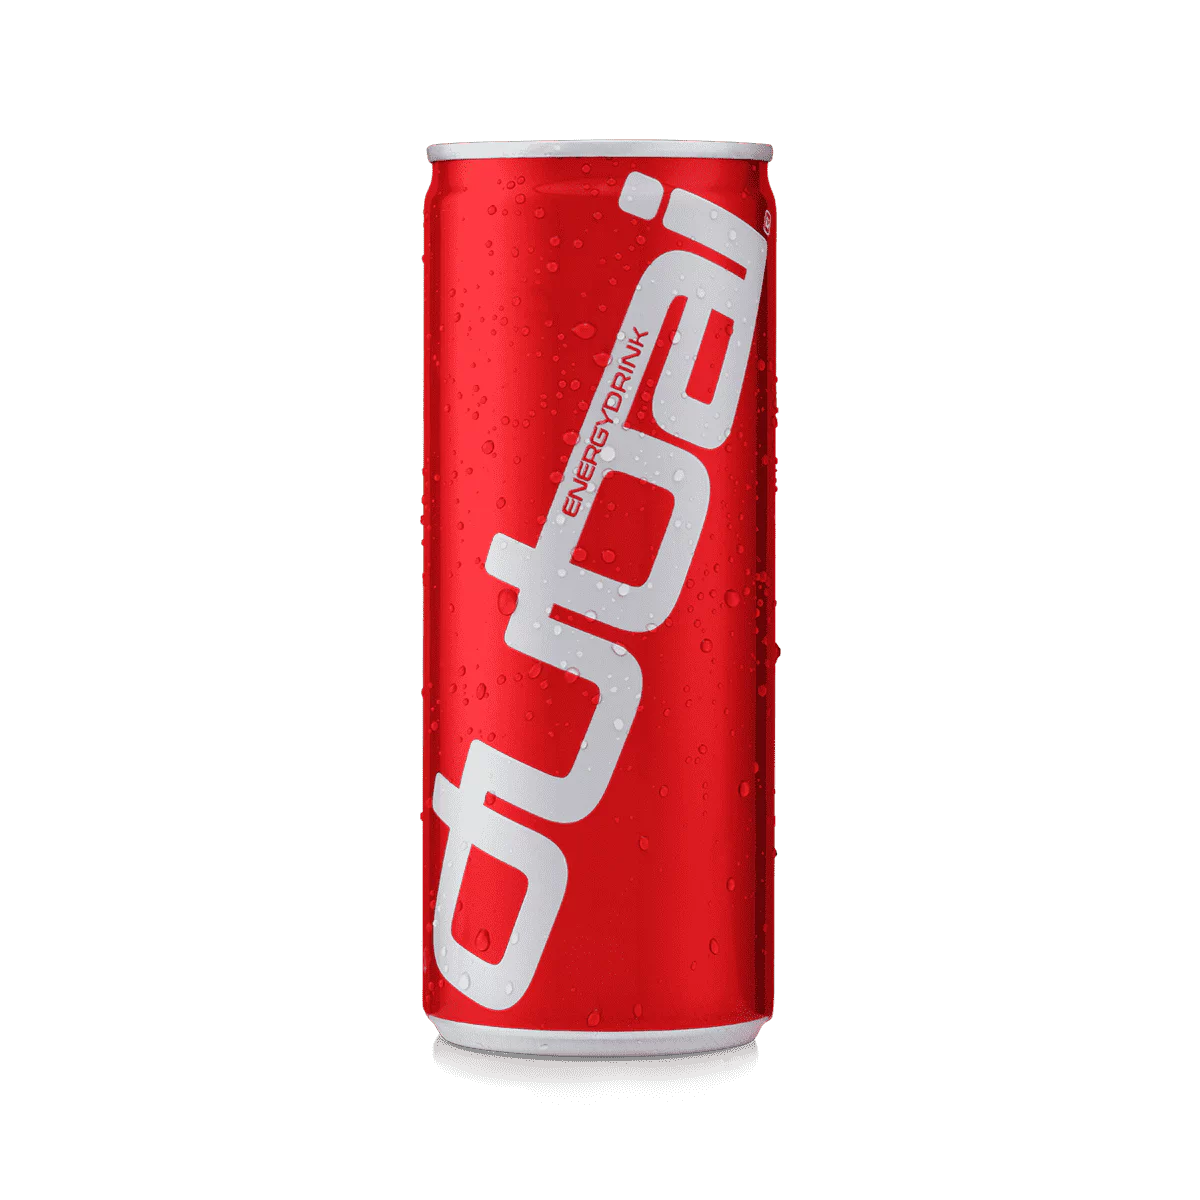 Dubai Energy Drink (Original Flavor) 24 pack